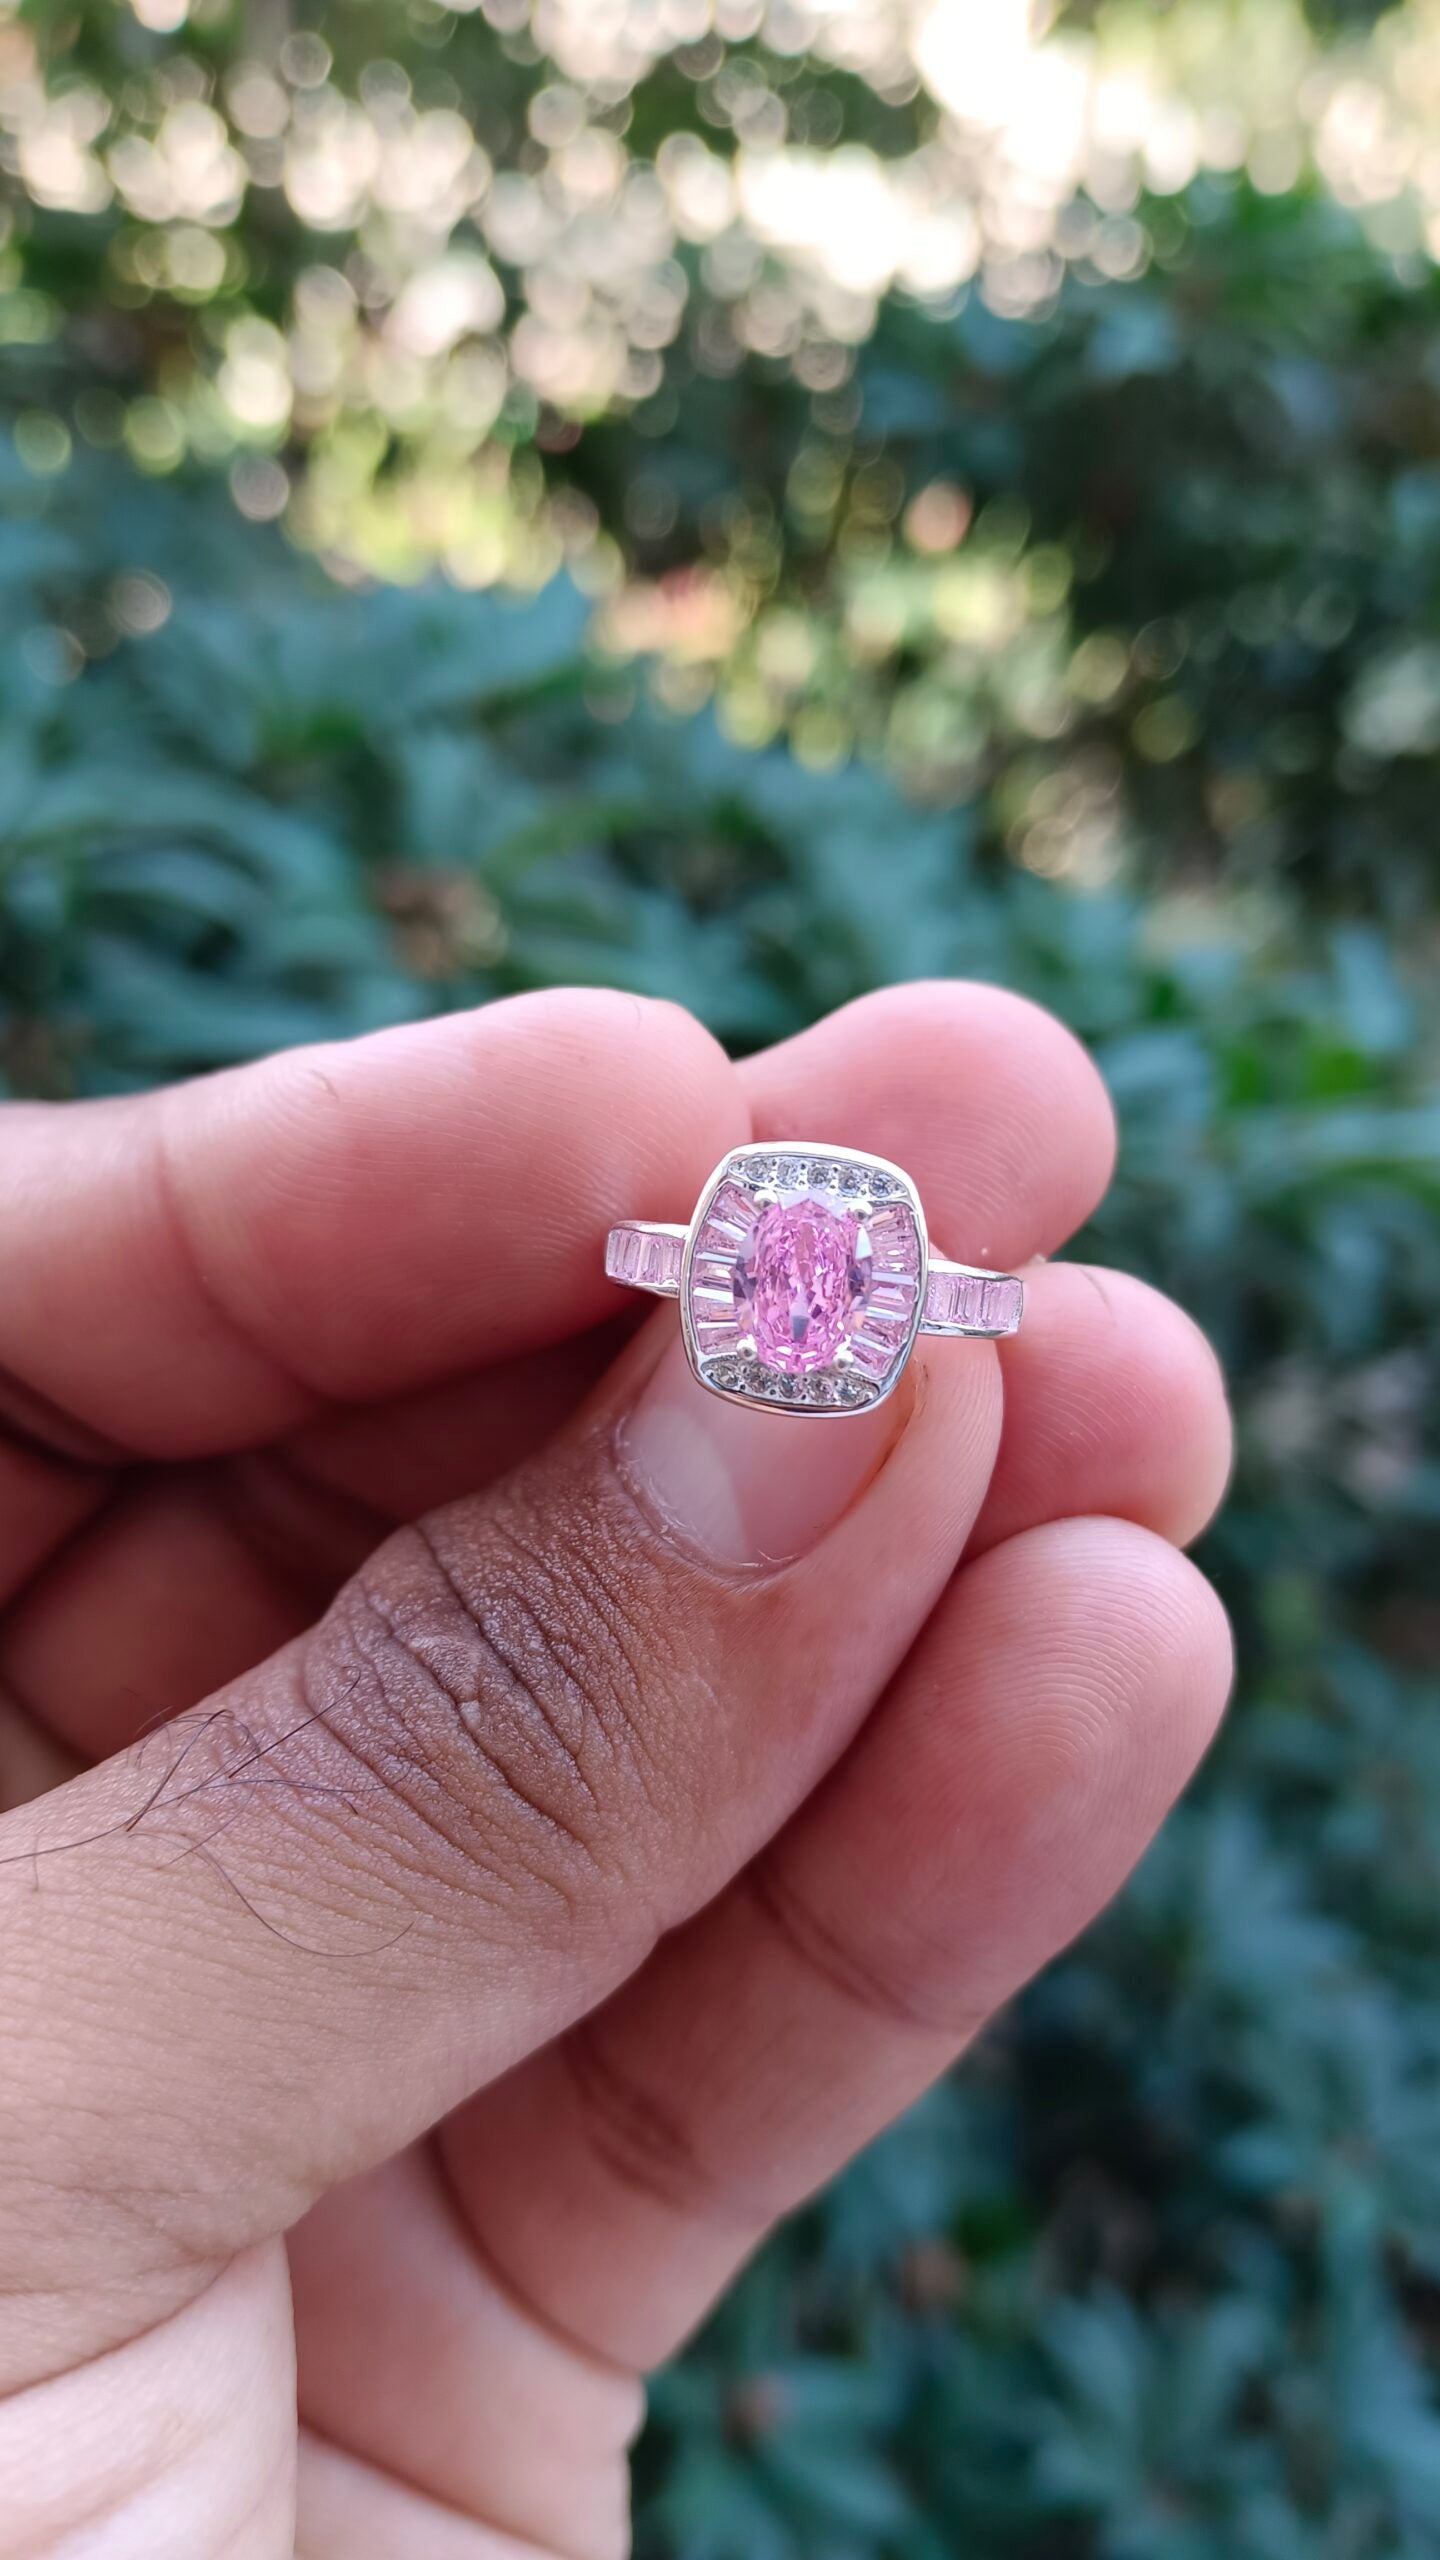 Pink Zircon Ladies Ring